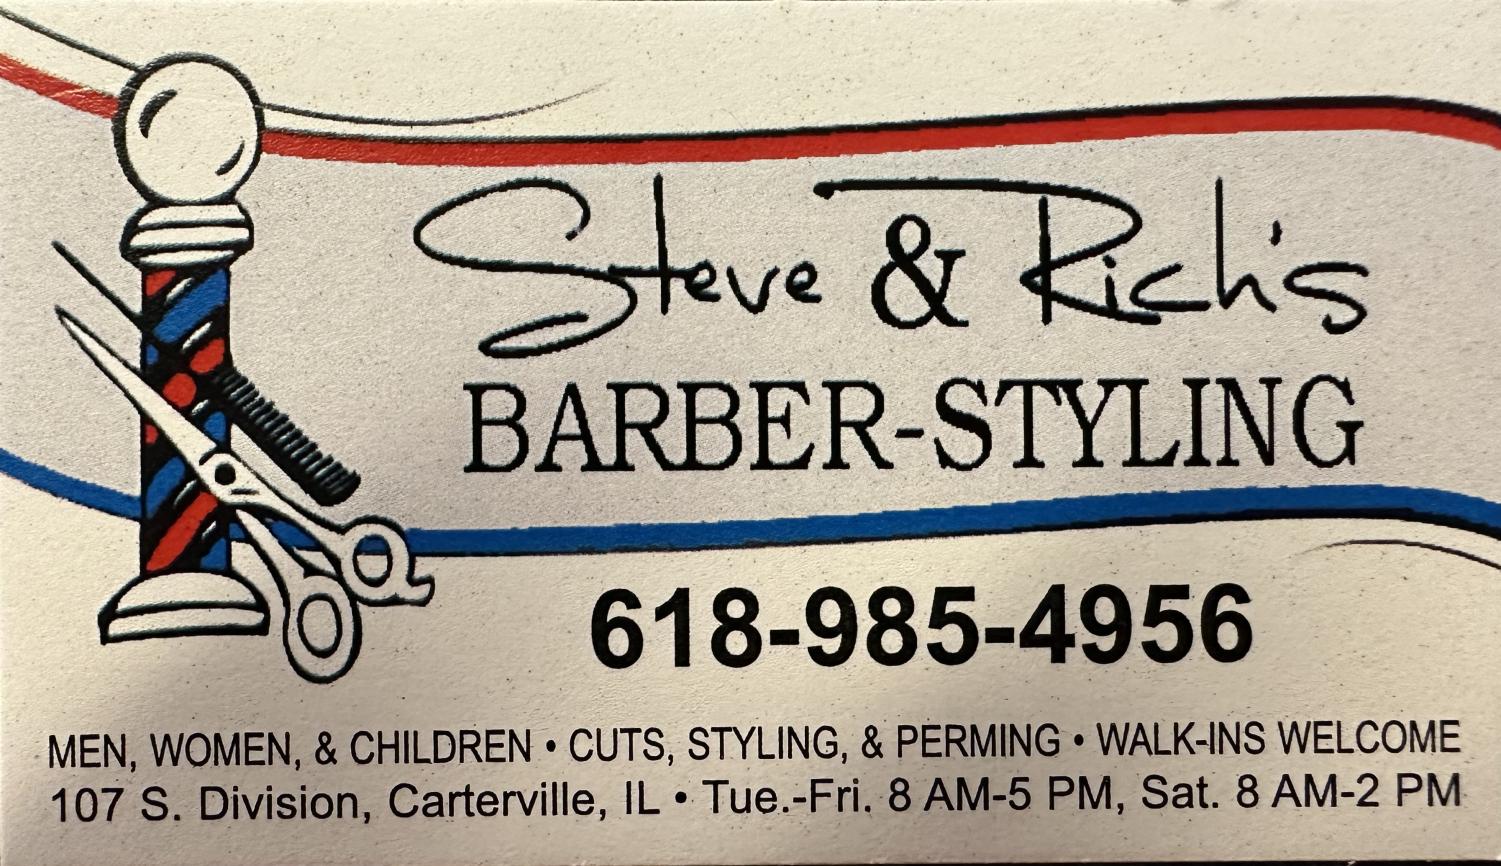 Steve & Richs Barber-Styling